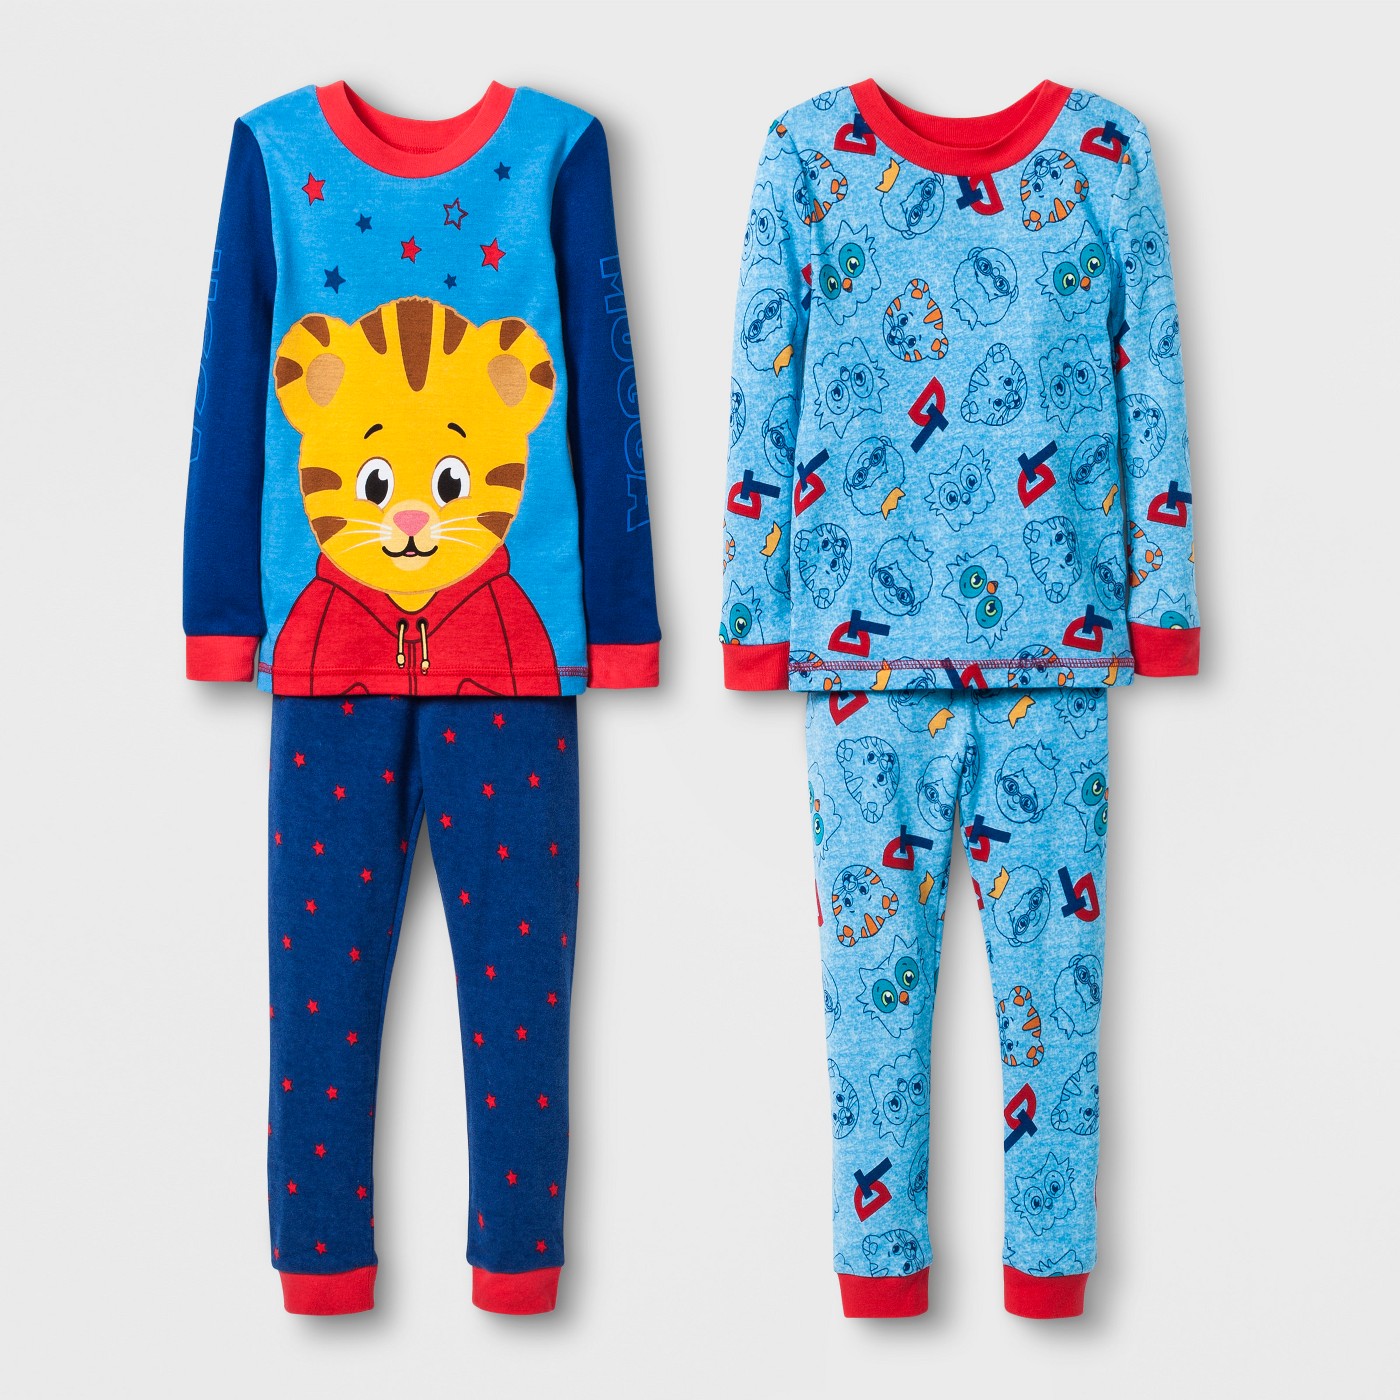 Toddler Boys' Daniel Tiger 4pc Cotton Pajama Set - Blue - image 1 of 1